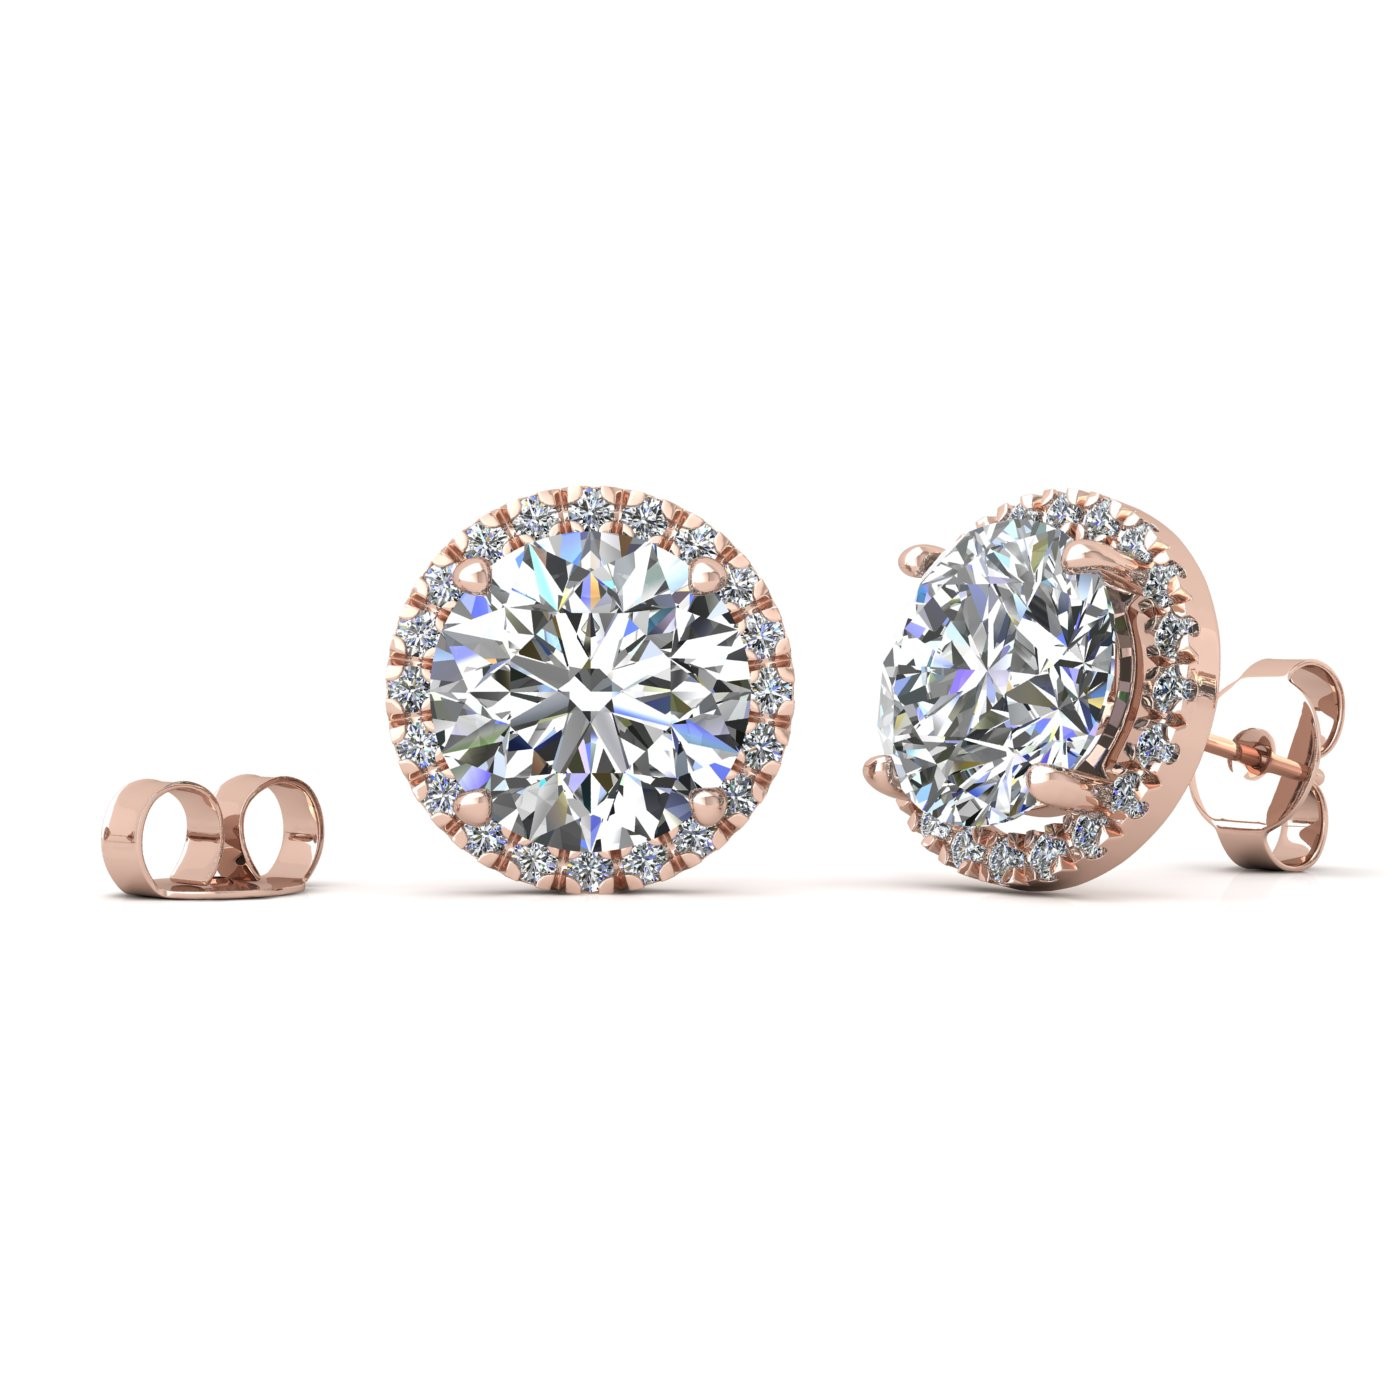 18k rose gold 1,5 ct each (3,0 tcw) 4 prongs round shape diamond earrings with diamond pavÉ set halo